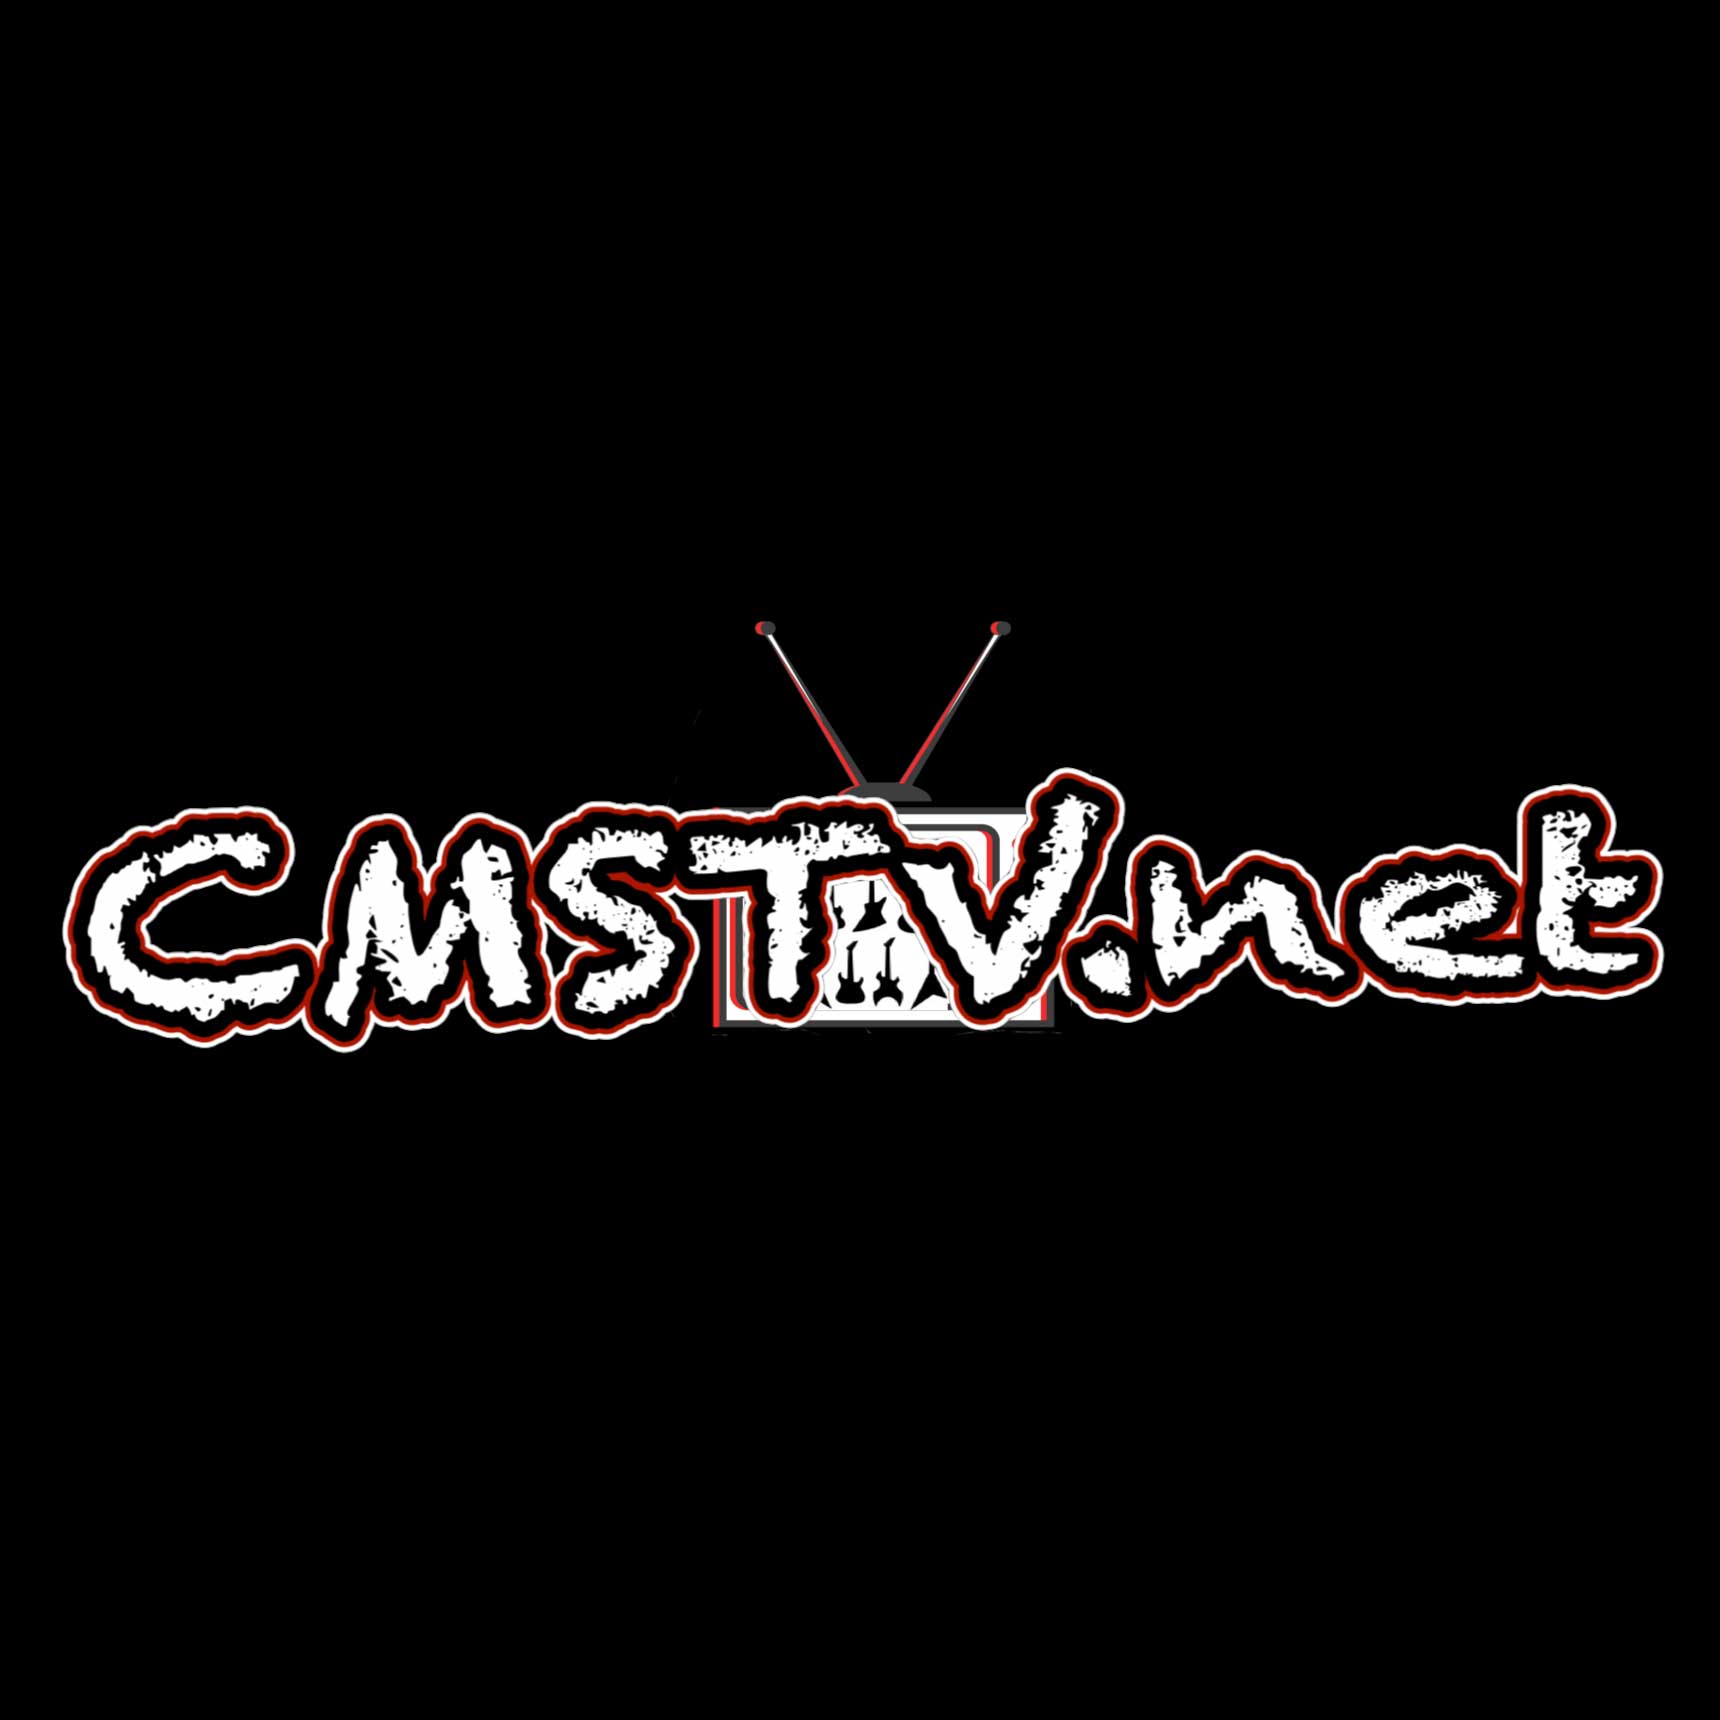 Art for Heavy Metal's On Demand Video Platform by CMStv.net